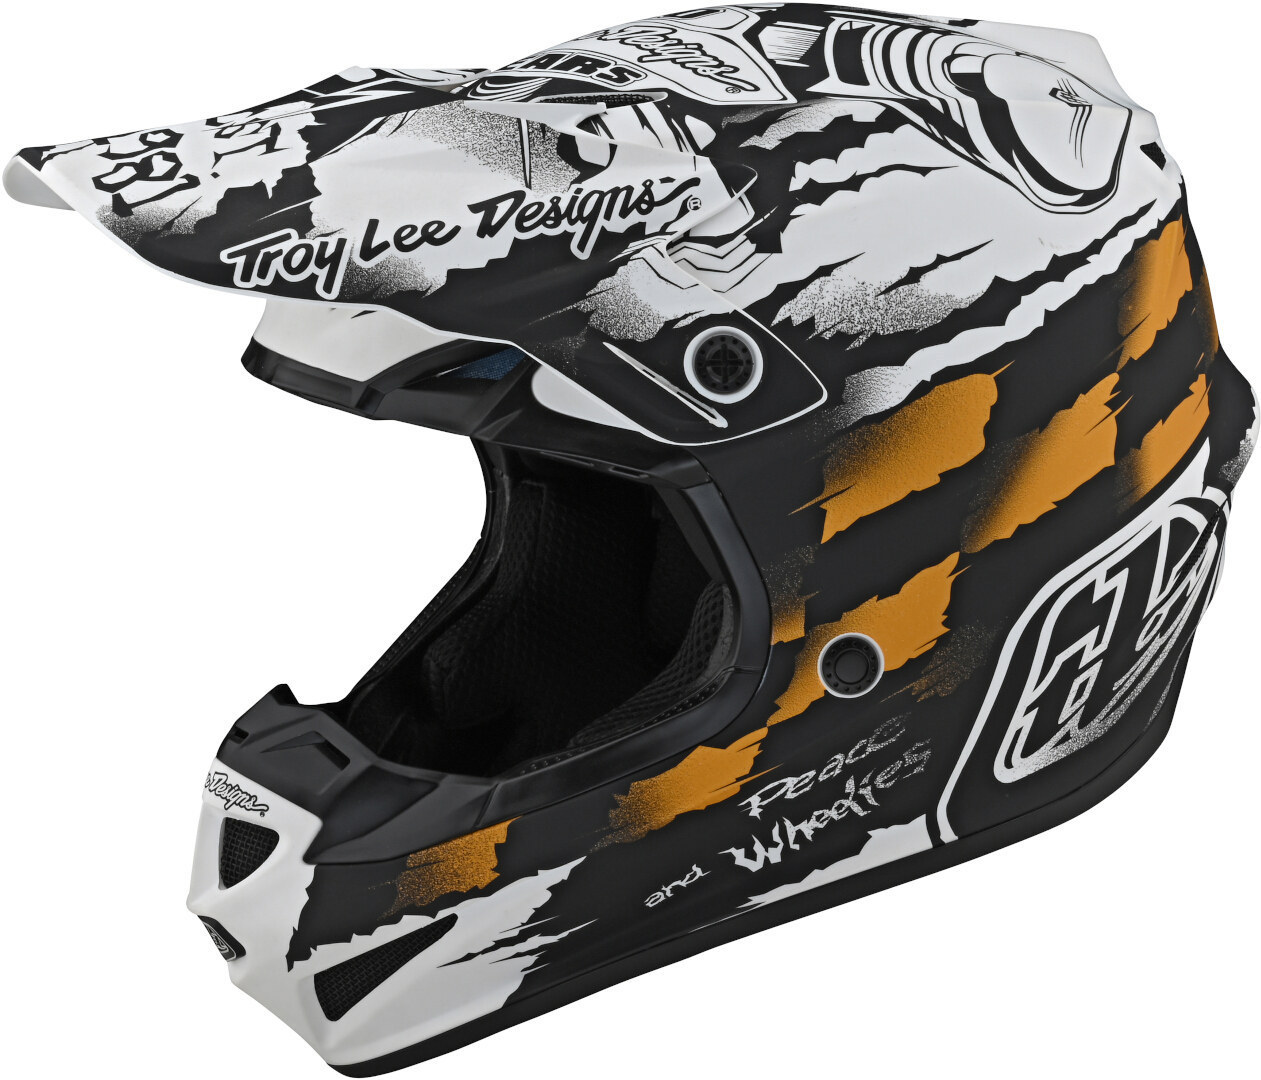 Шлем Troy Lee Designs SE4 Strike для мотокросса, бело-черный